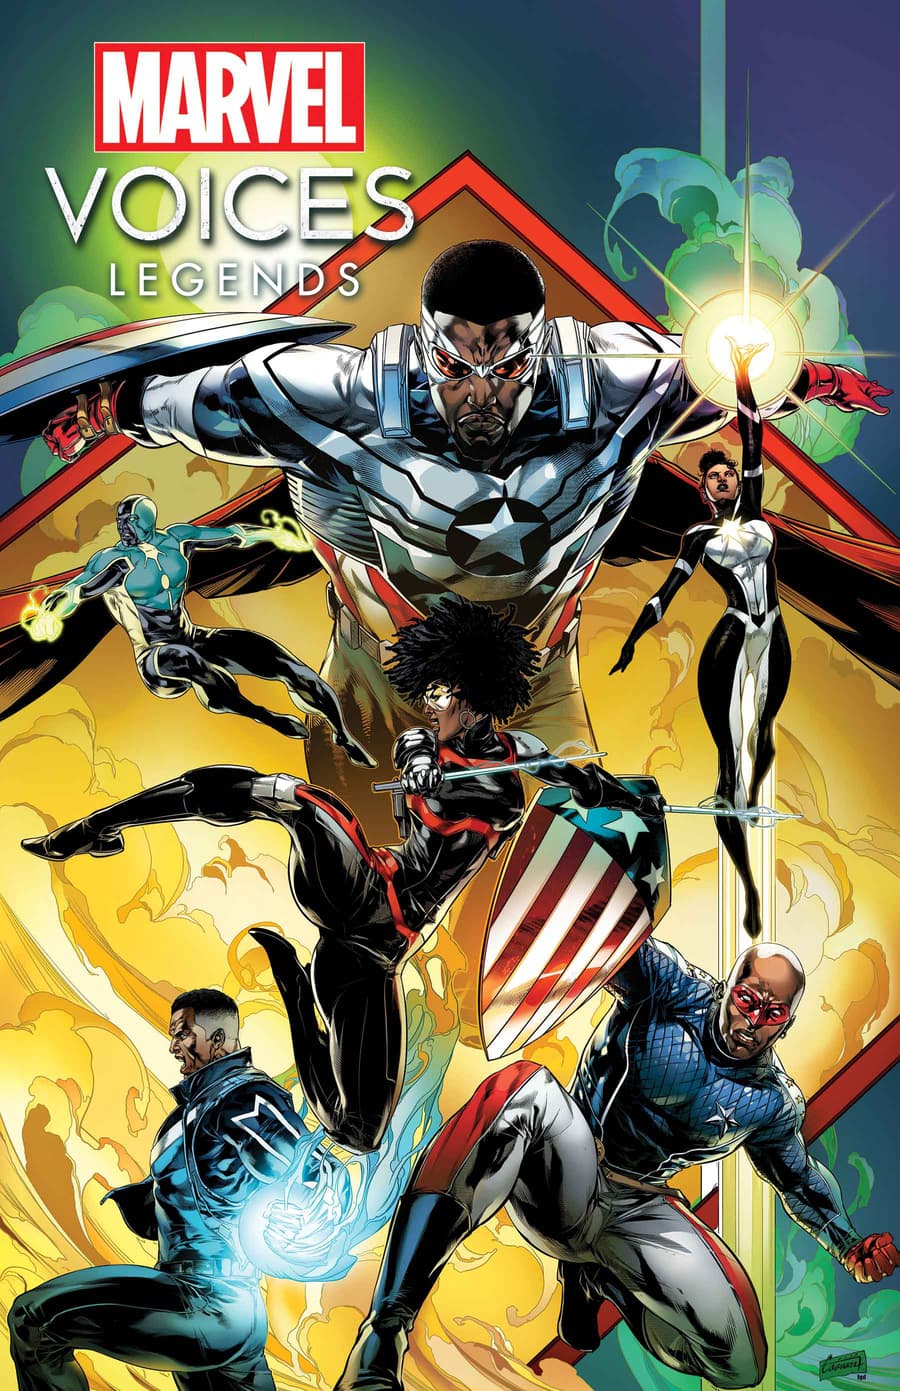 Marvel super hero Captain America, Spectrum, Patriot, Blue Marvel, Misty Knight, and Deathlok